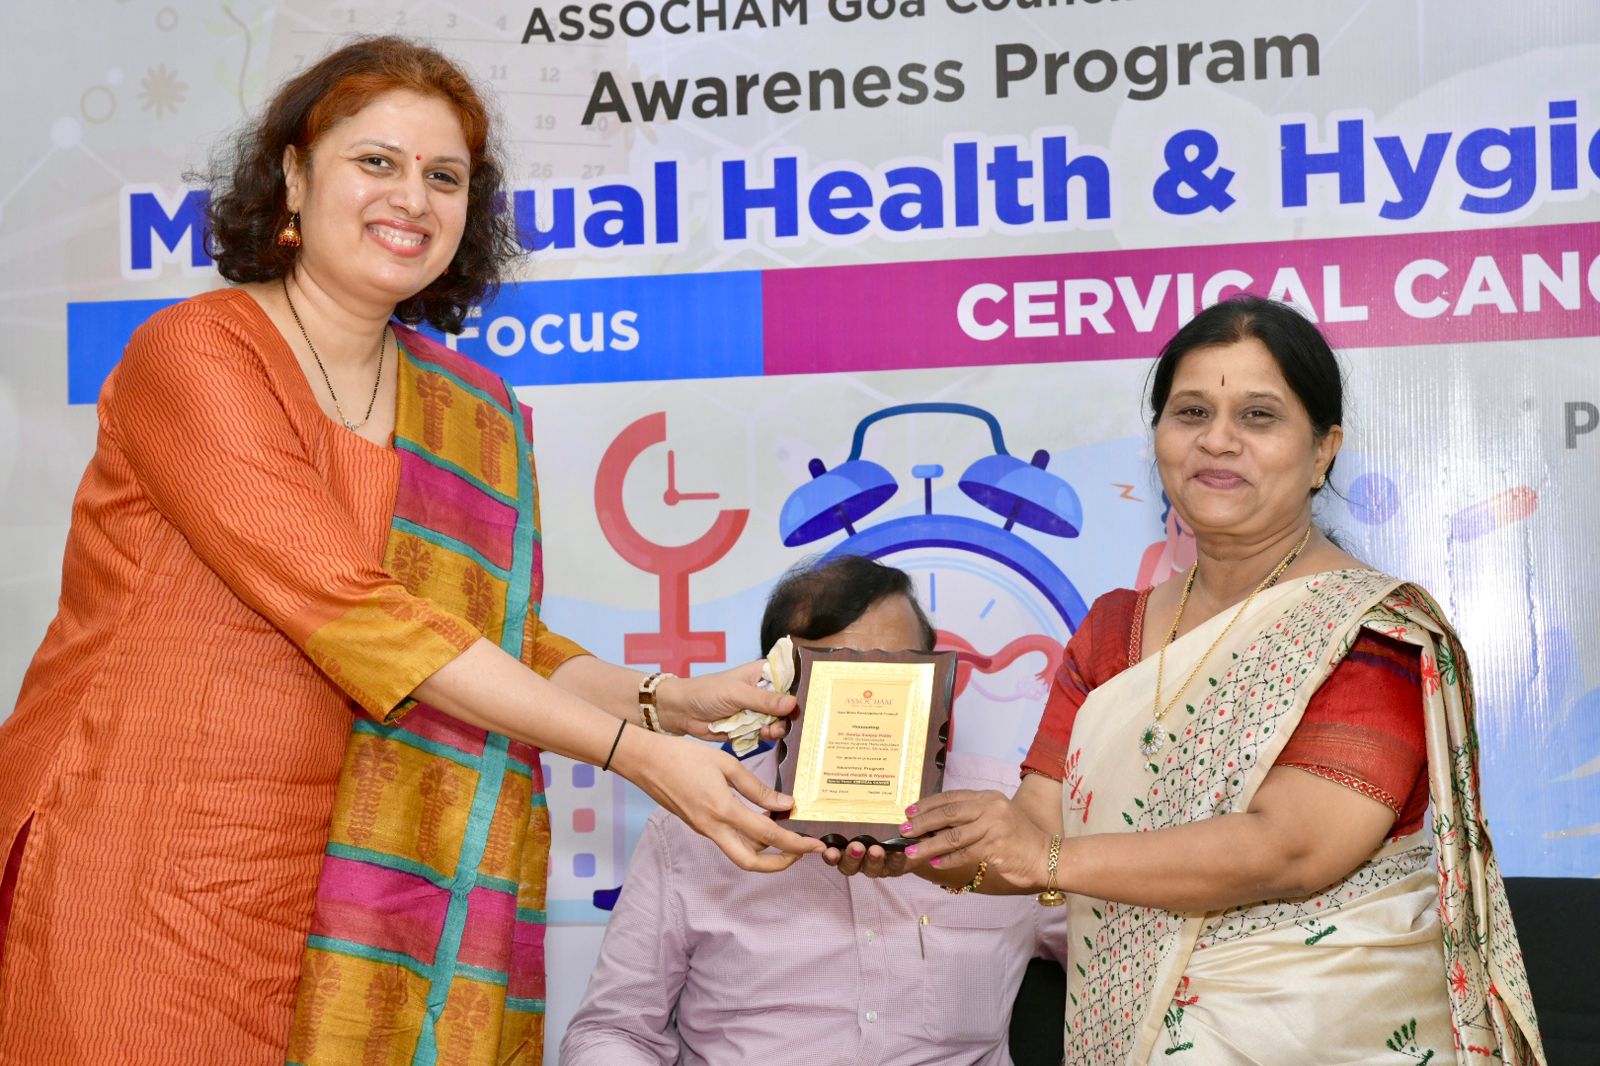 Menstrual Health & Hygiene Special focus: Cervical Cancer